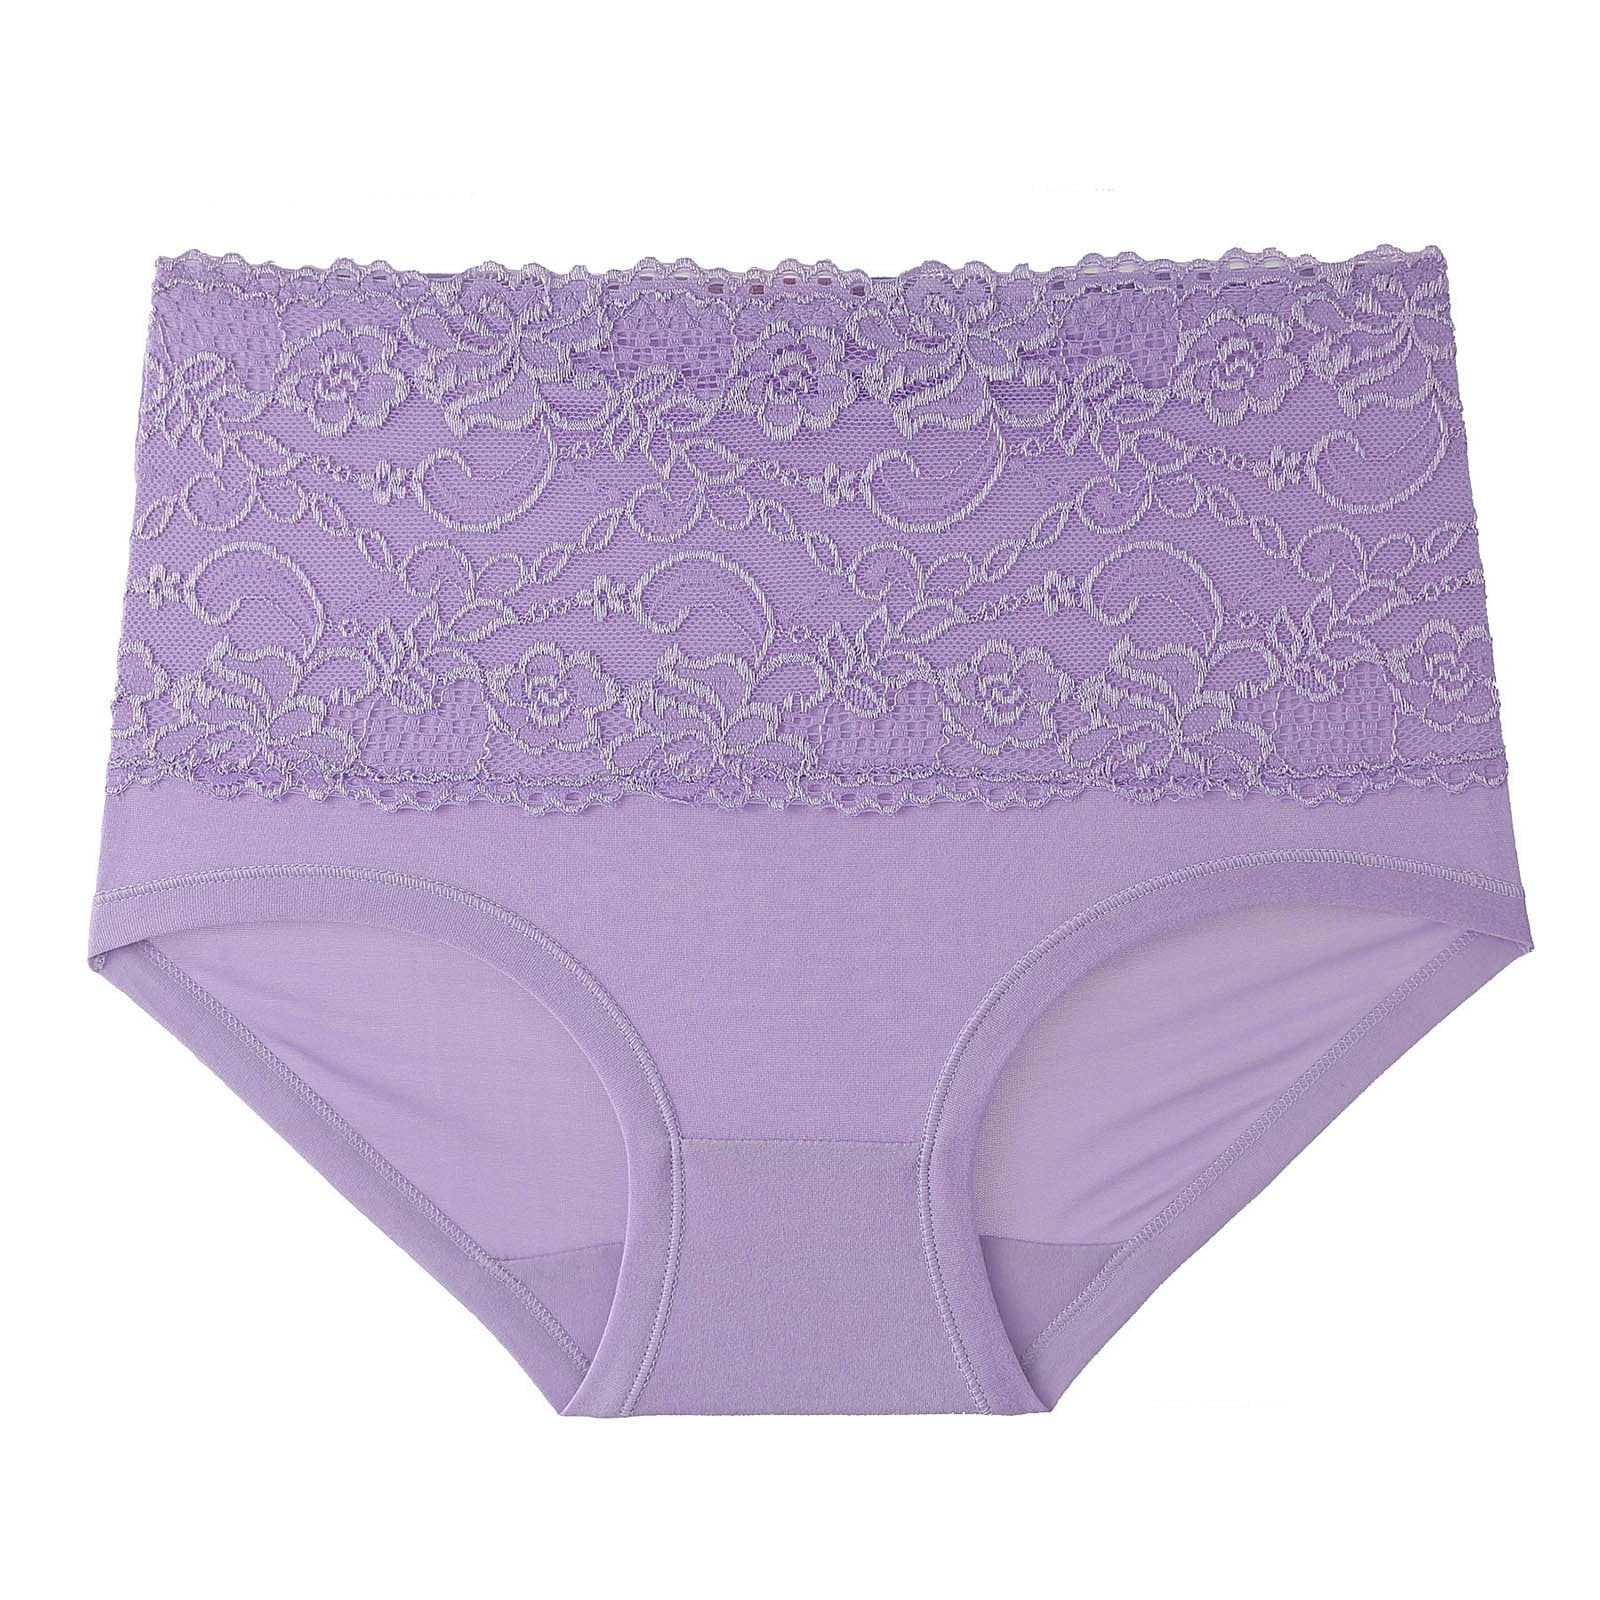 Buy VANILLAFUDGE Multicolor Cotton Panties for Women's (purple 2xl